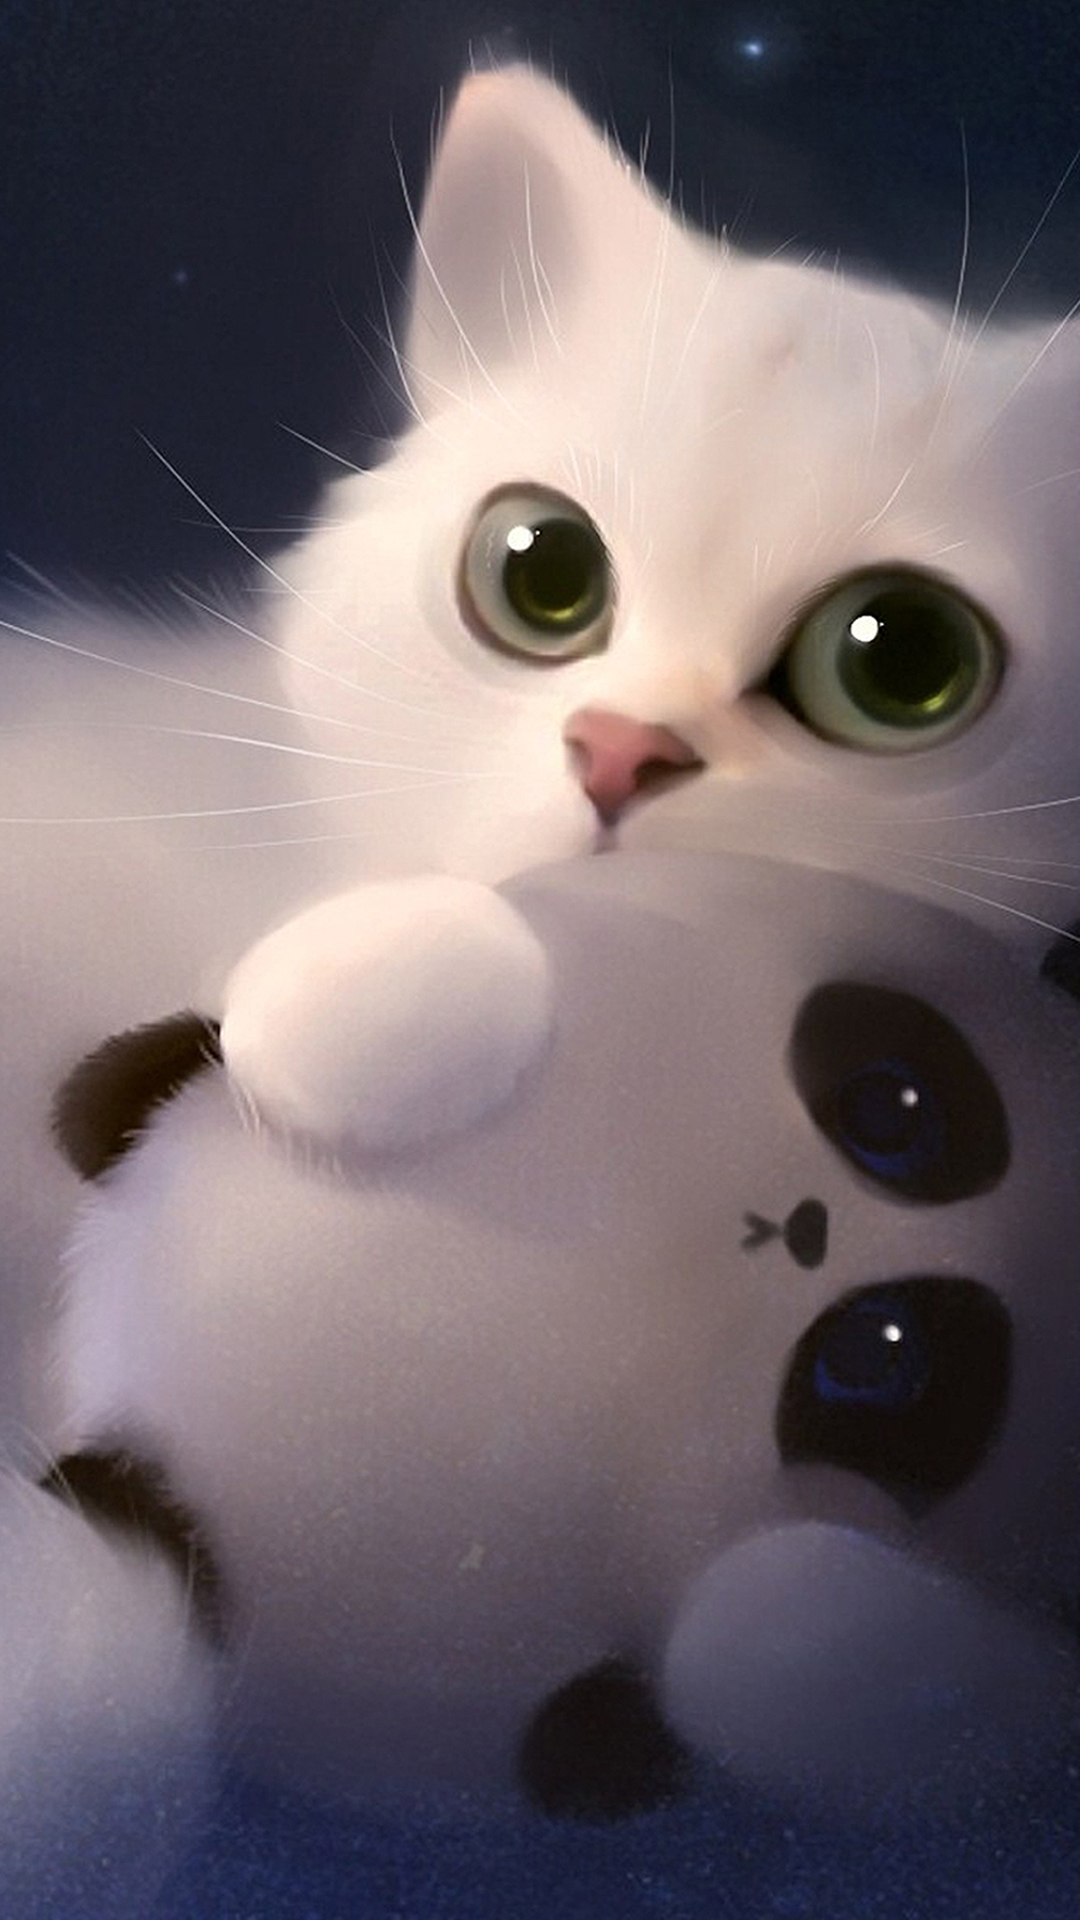 cute kitten with big eyes